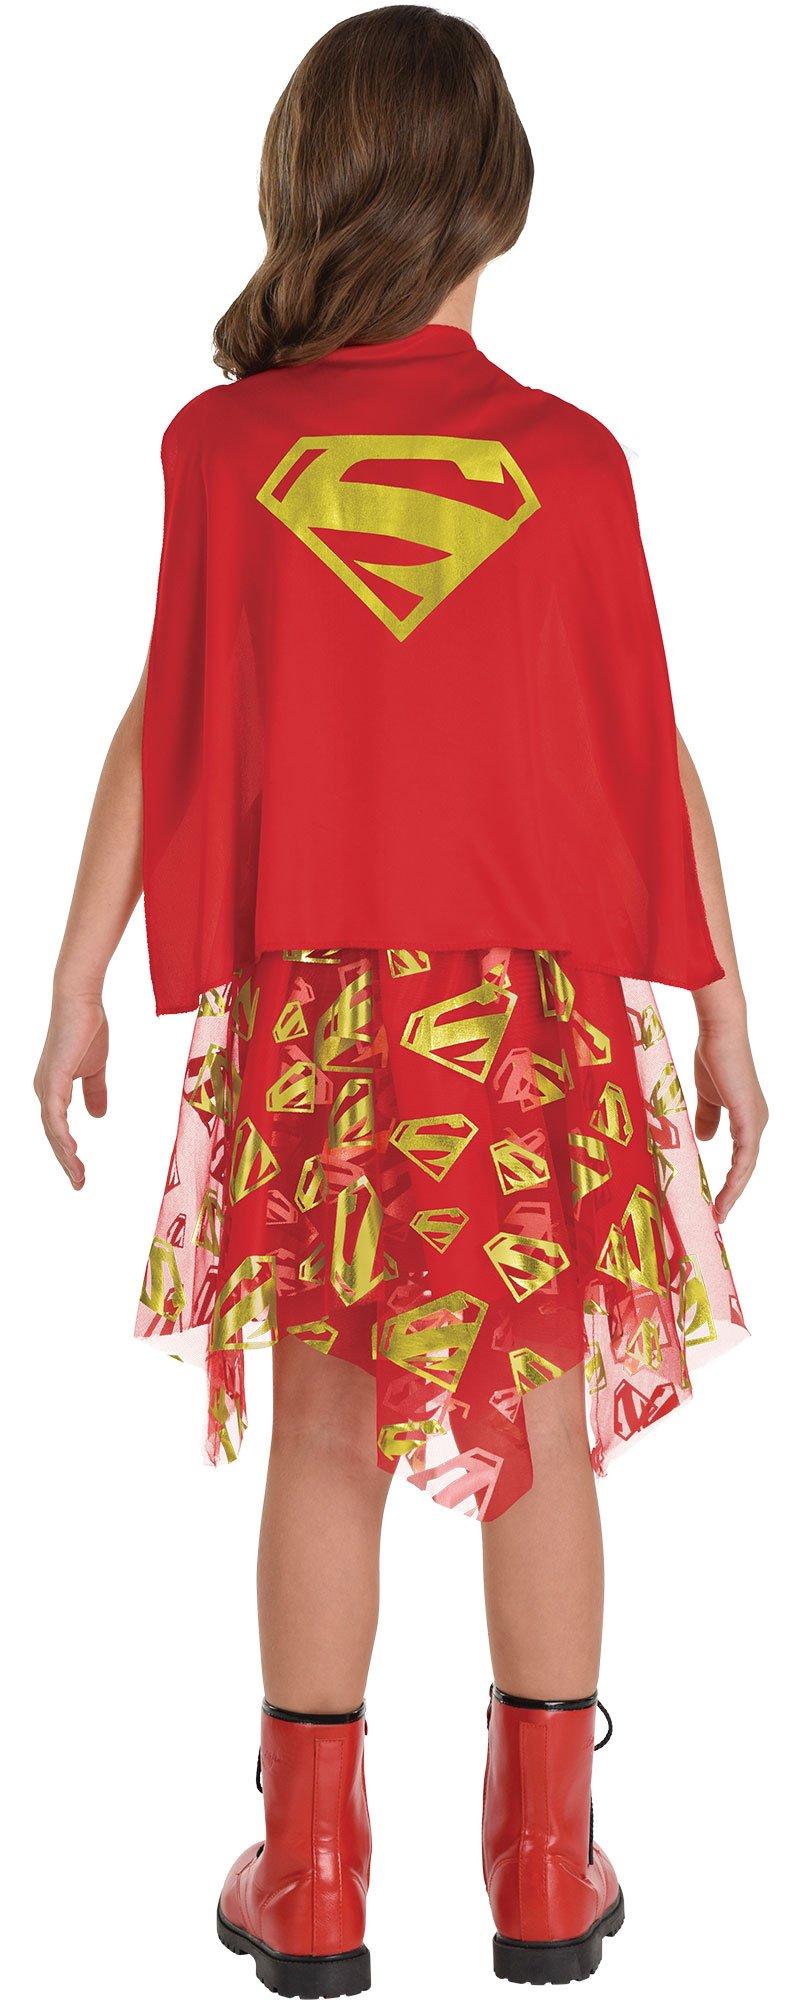 Kids' Glitter Supergirl Dress Costume - DC Comics